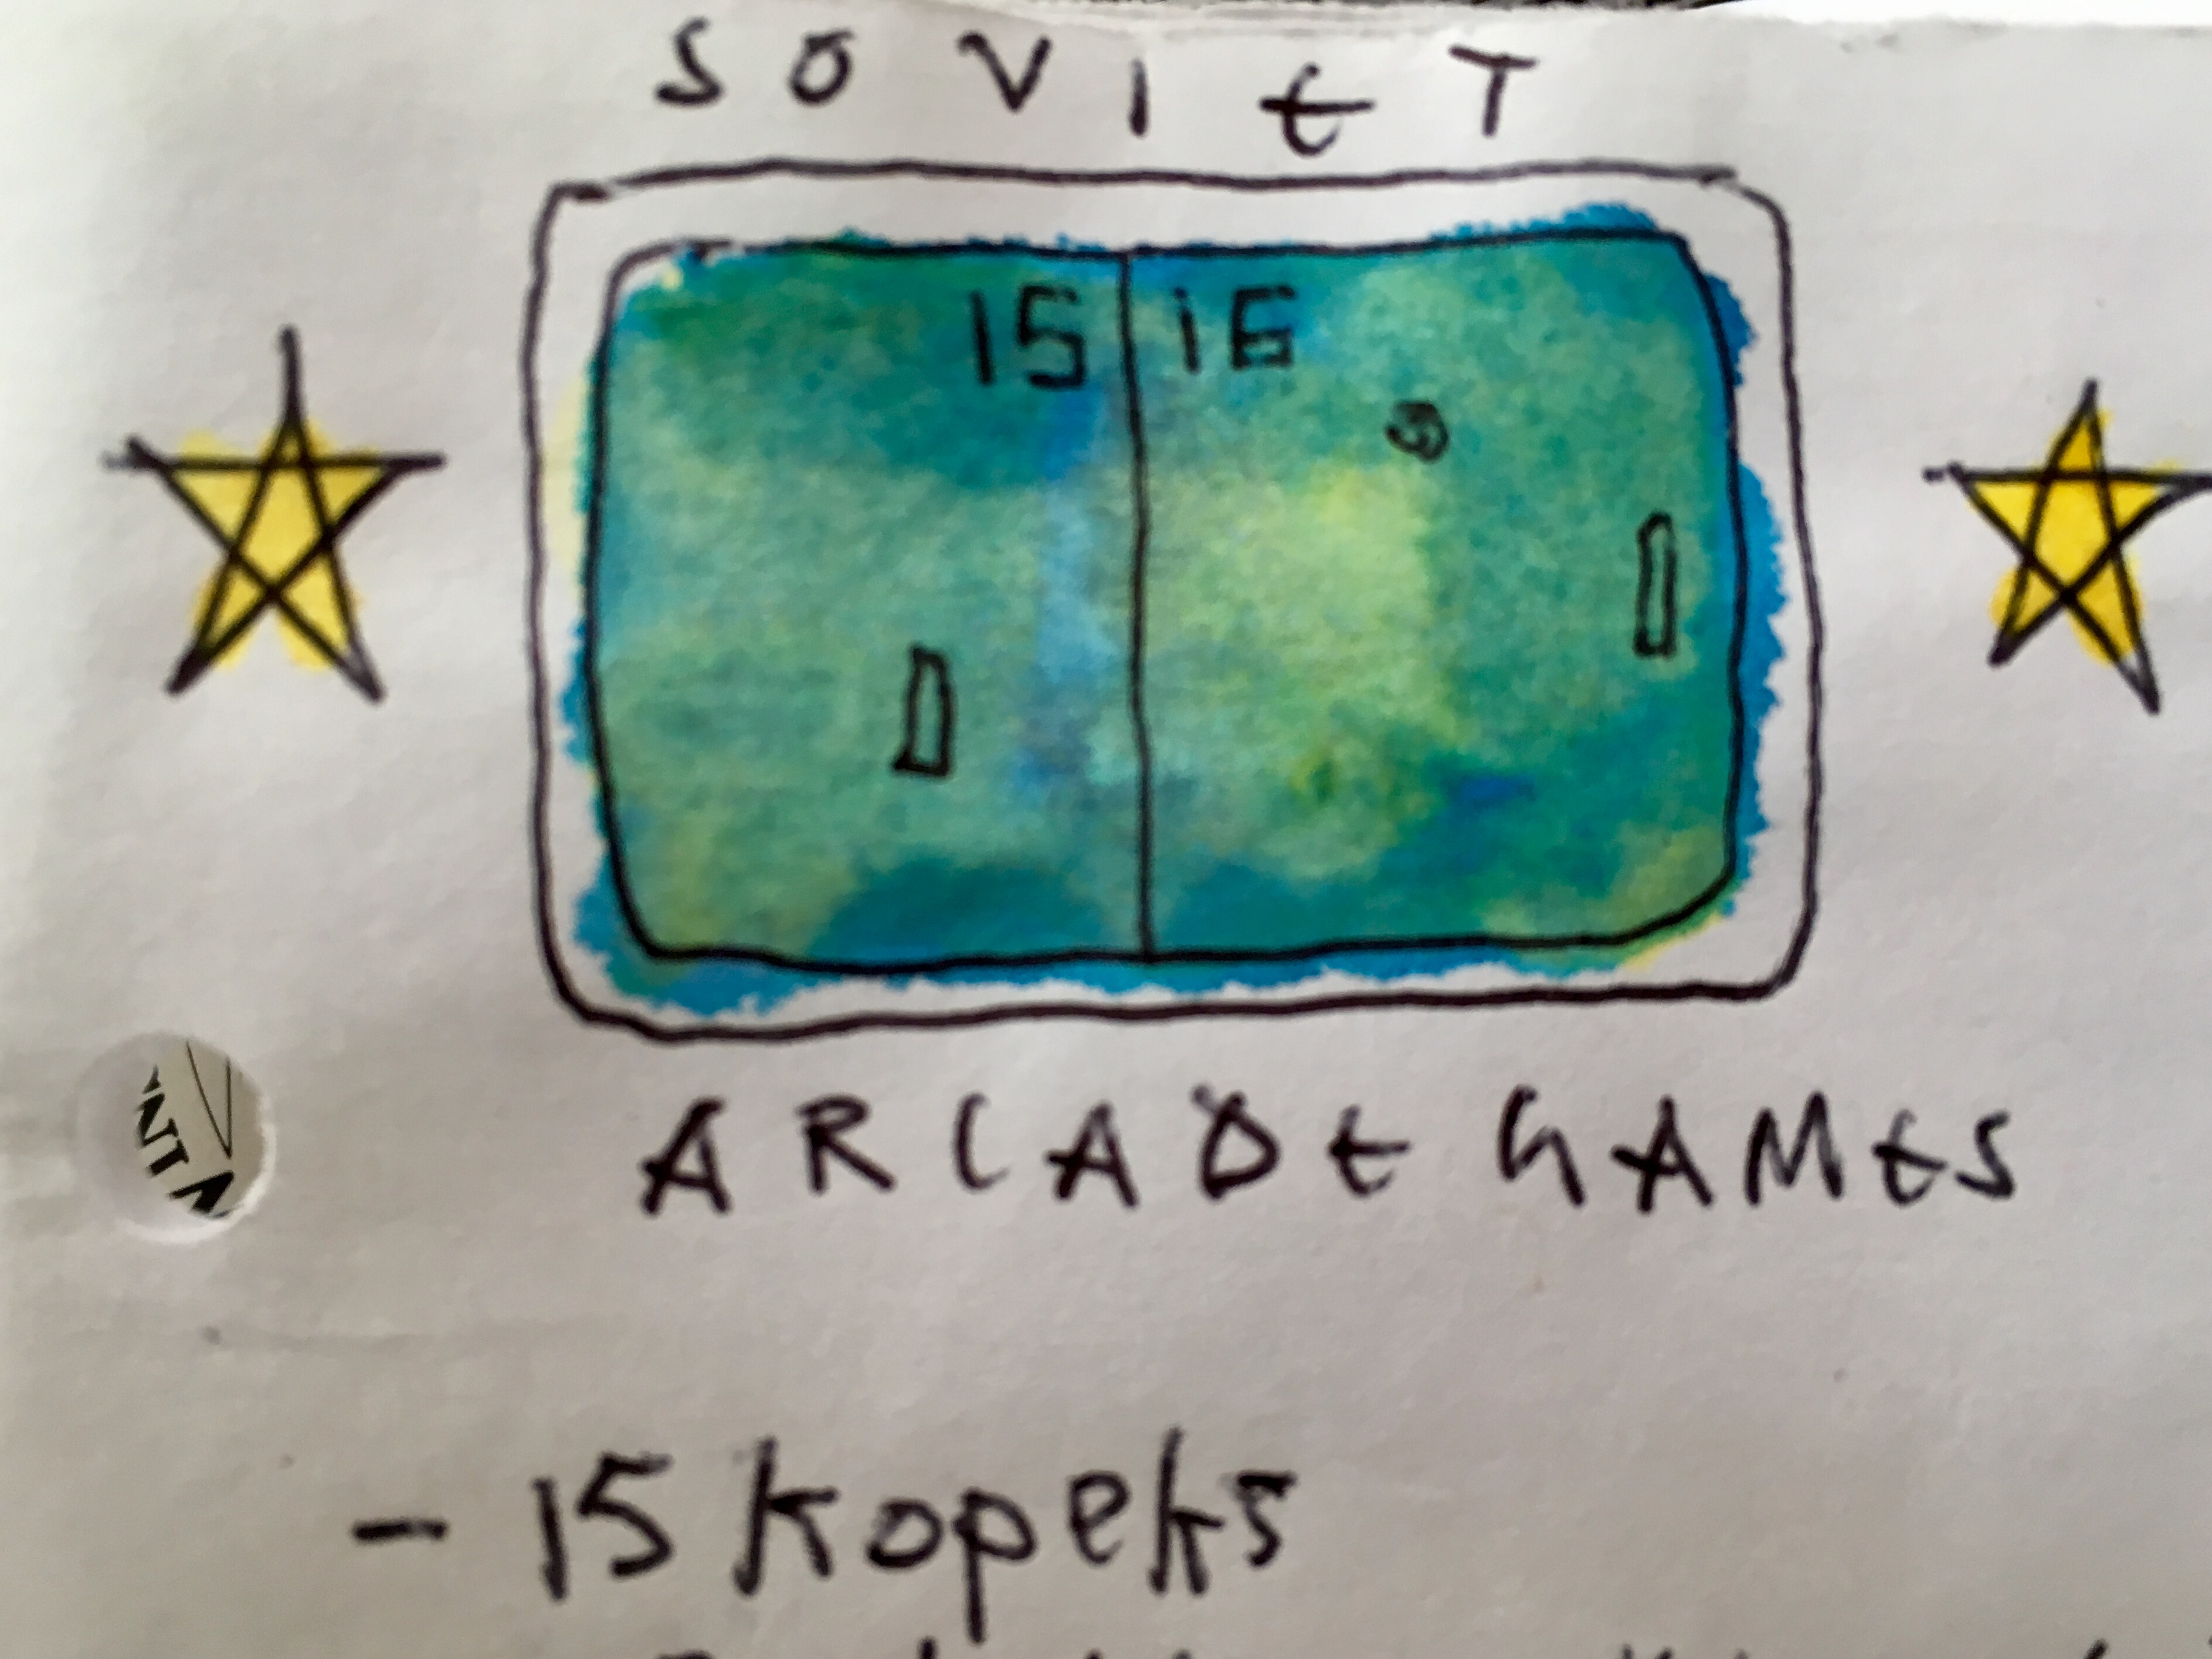 Sketch of a Soviet Arcade Game